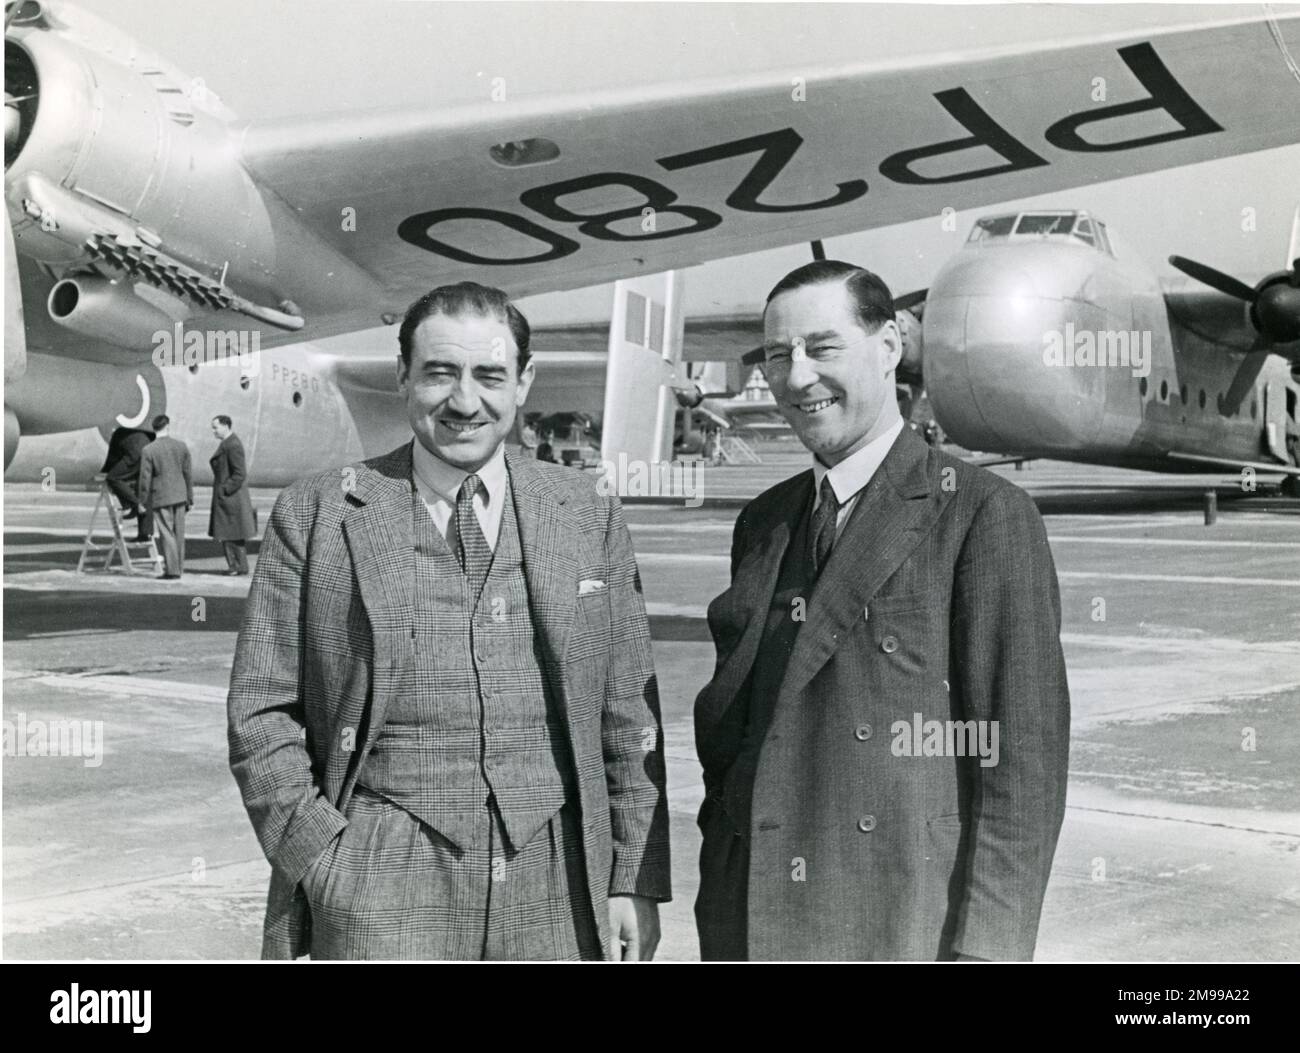 MR Marsh, Handley Page test pilota (?), a sinistra, e Arthur John ?Bill? Pegg, Test Pilot, Bristol, forse al 1946 Royal Aeronautical Society Garden Party di Radlett il 15 settembre. Foto Stock